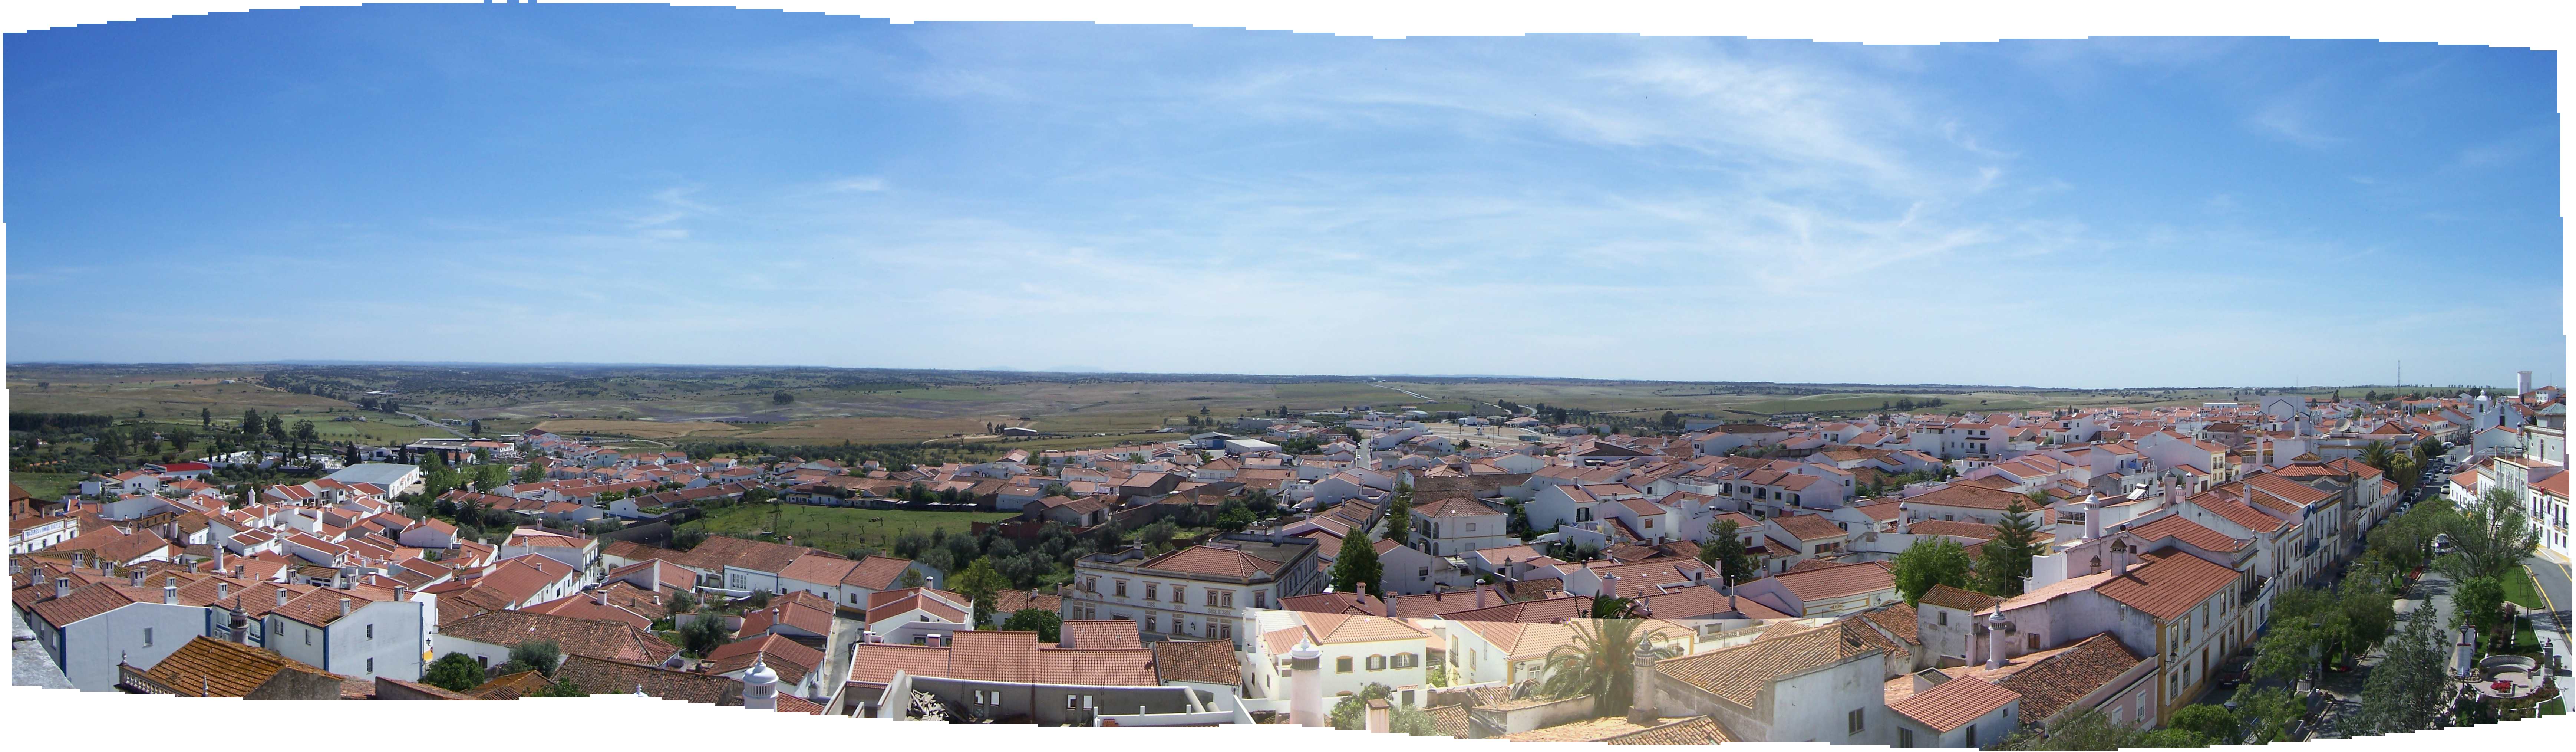 Dolce far niente in Alentejo, Portugal